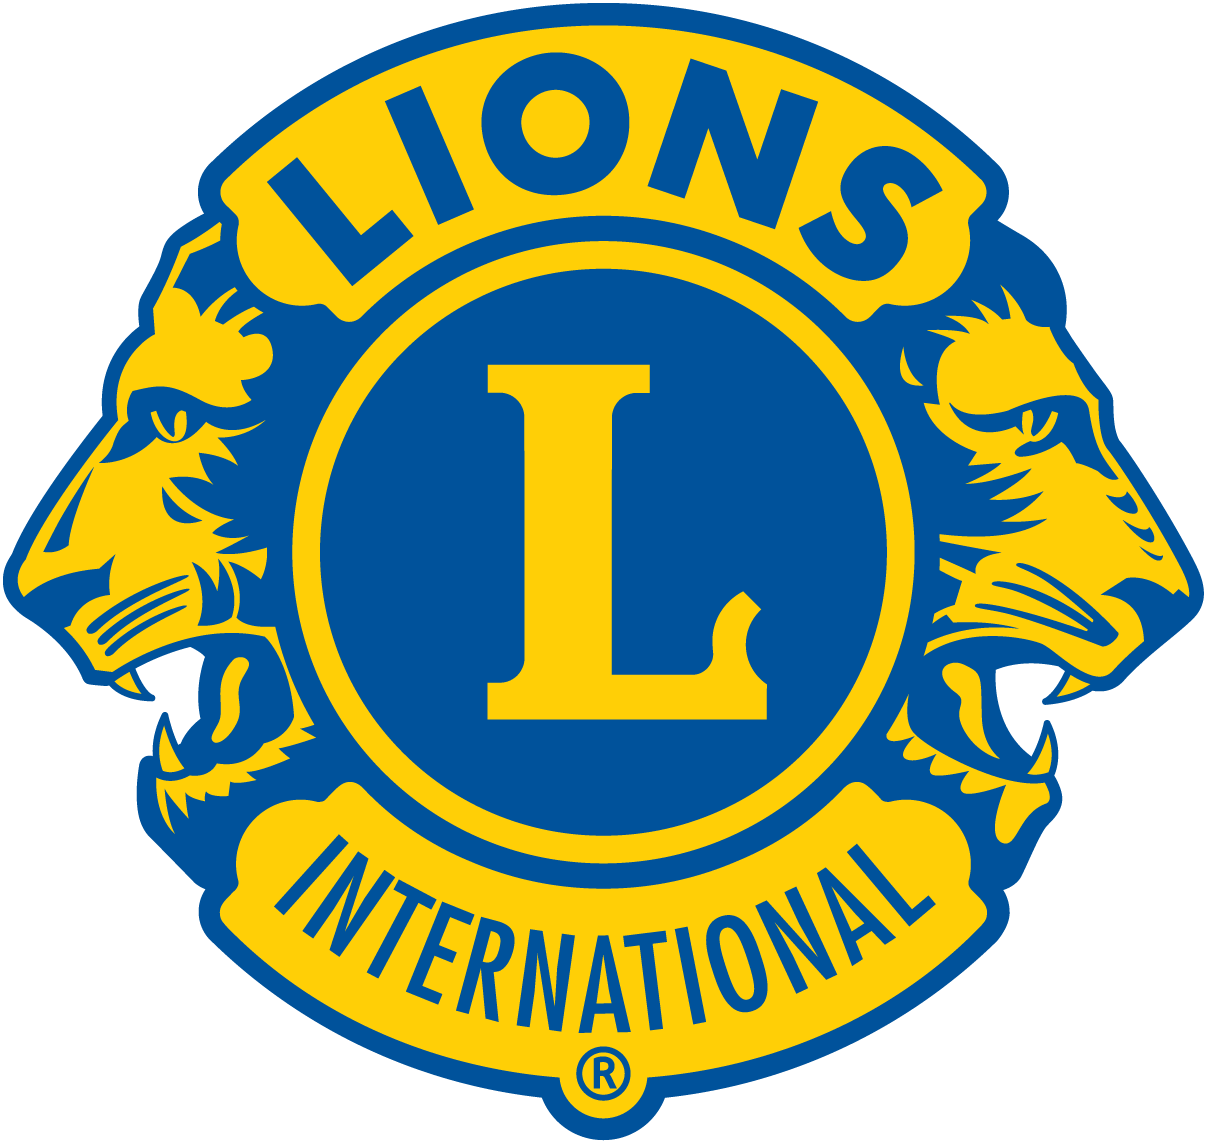 Lions Club Witten